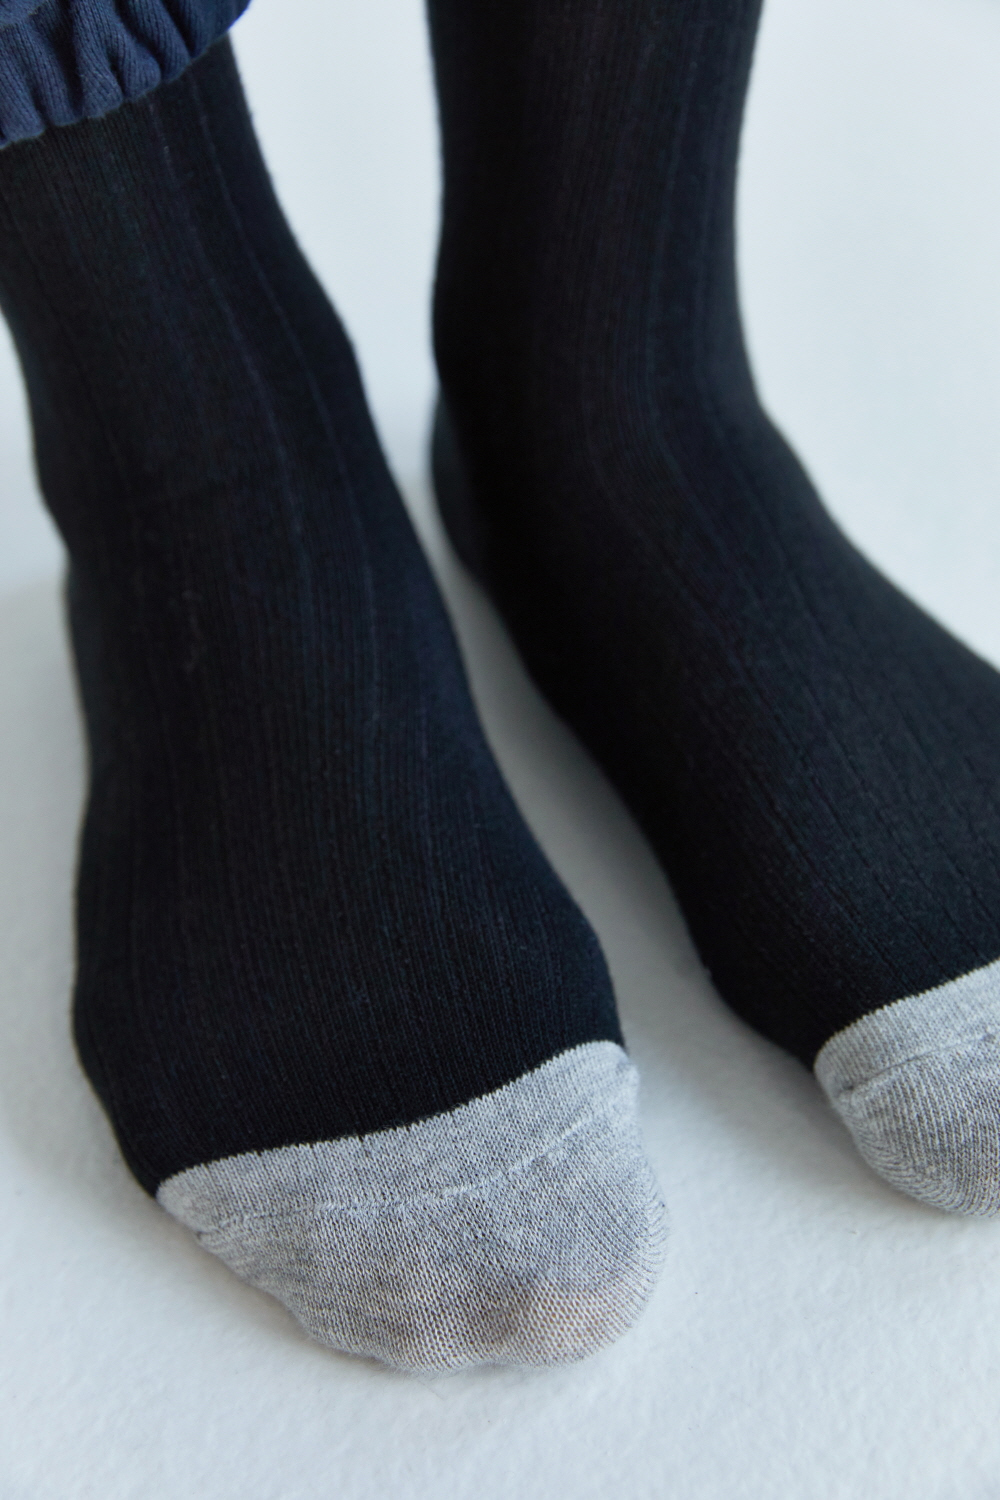 socks detail image-S12L29